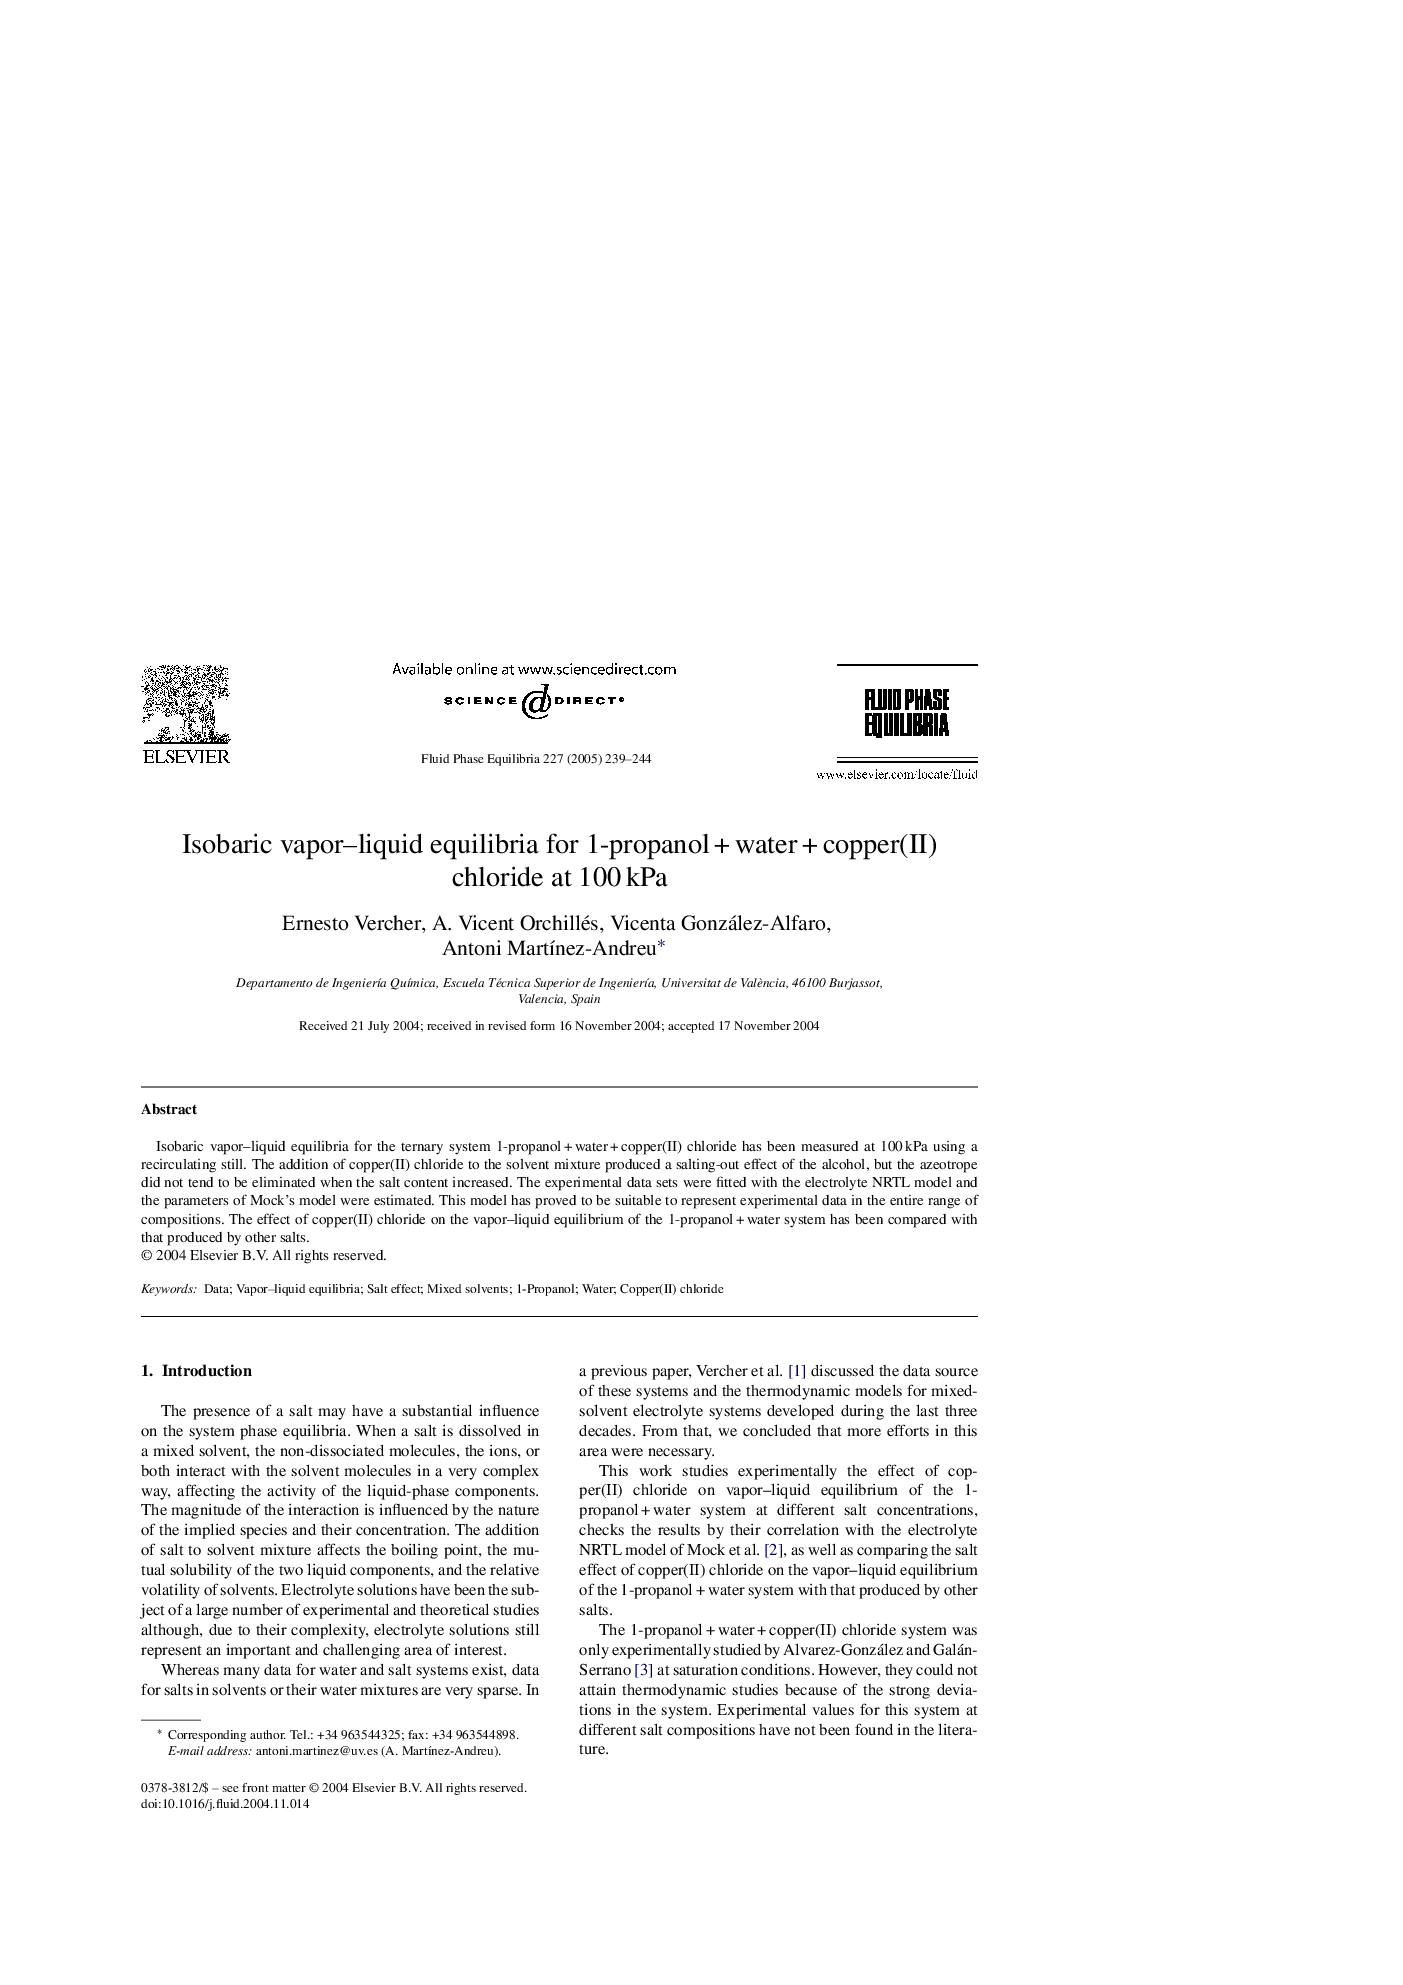 Isobaric vapor-liquid equilibria for 1-propanolÂ +Â waterÂ +Â copper(II) chloride at 100Â kPa